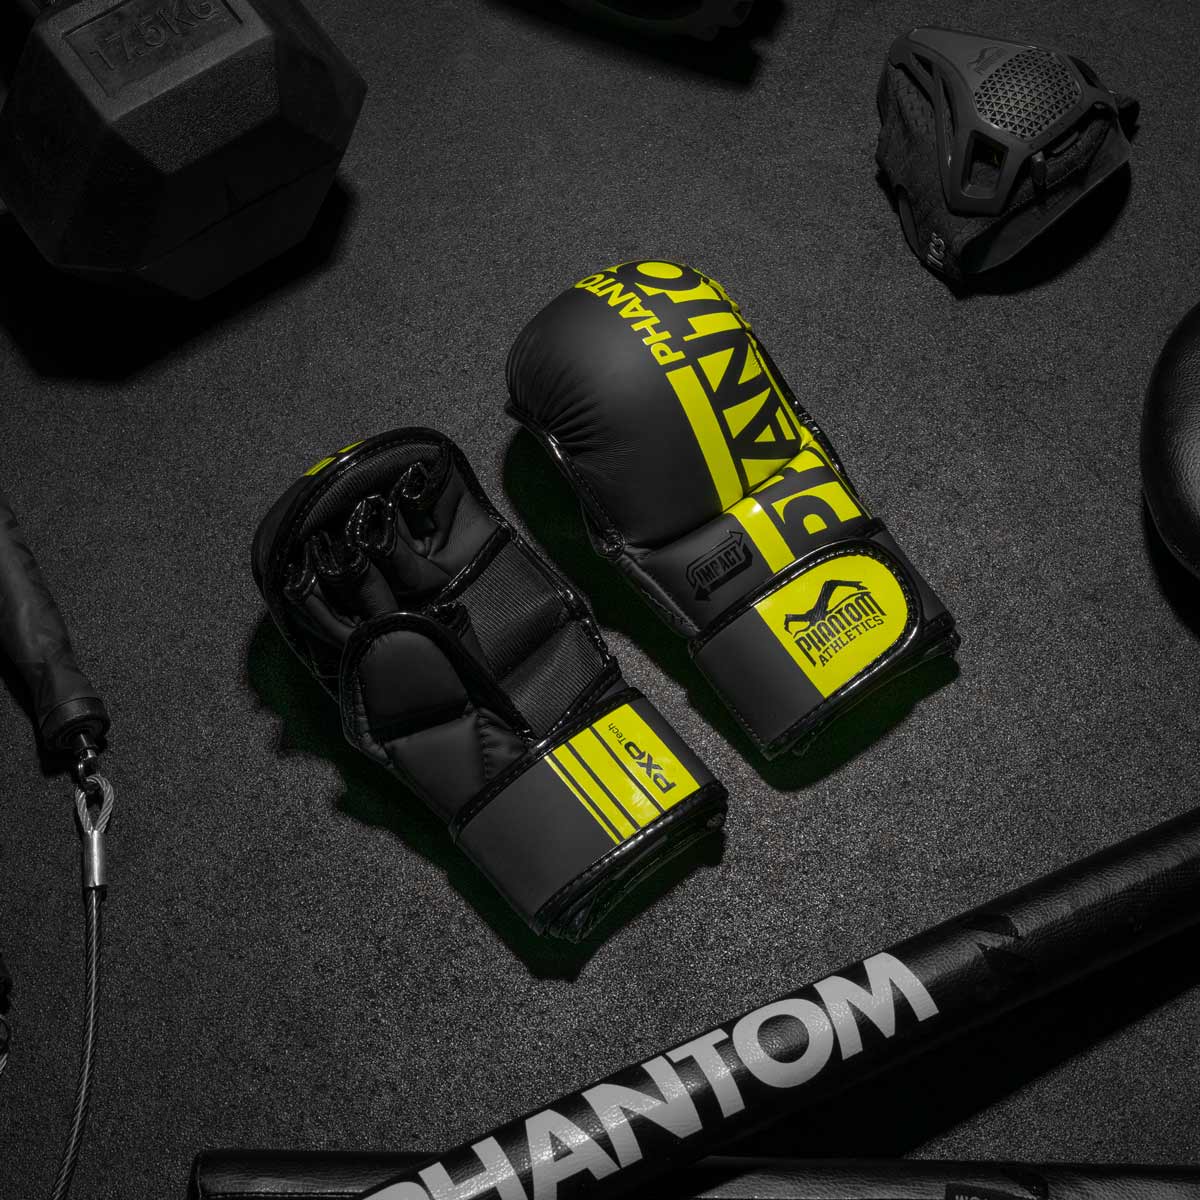 Die Phantom Apex MMA Sparringshandschuhe am Gymboden neben der Phantom Trainingsmaske.